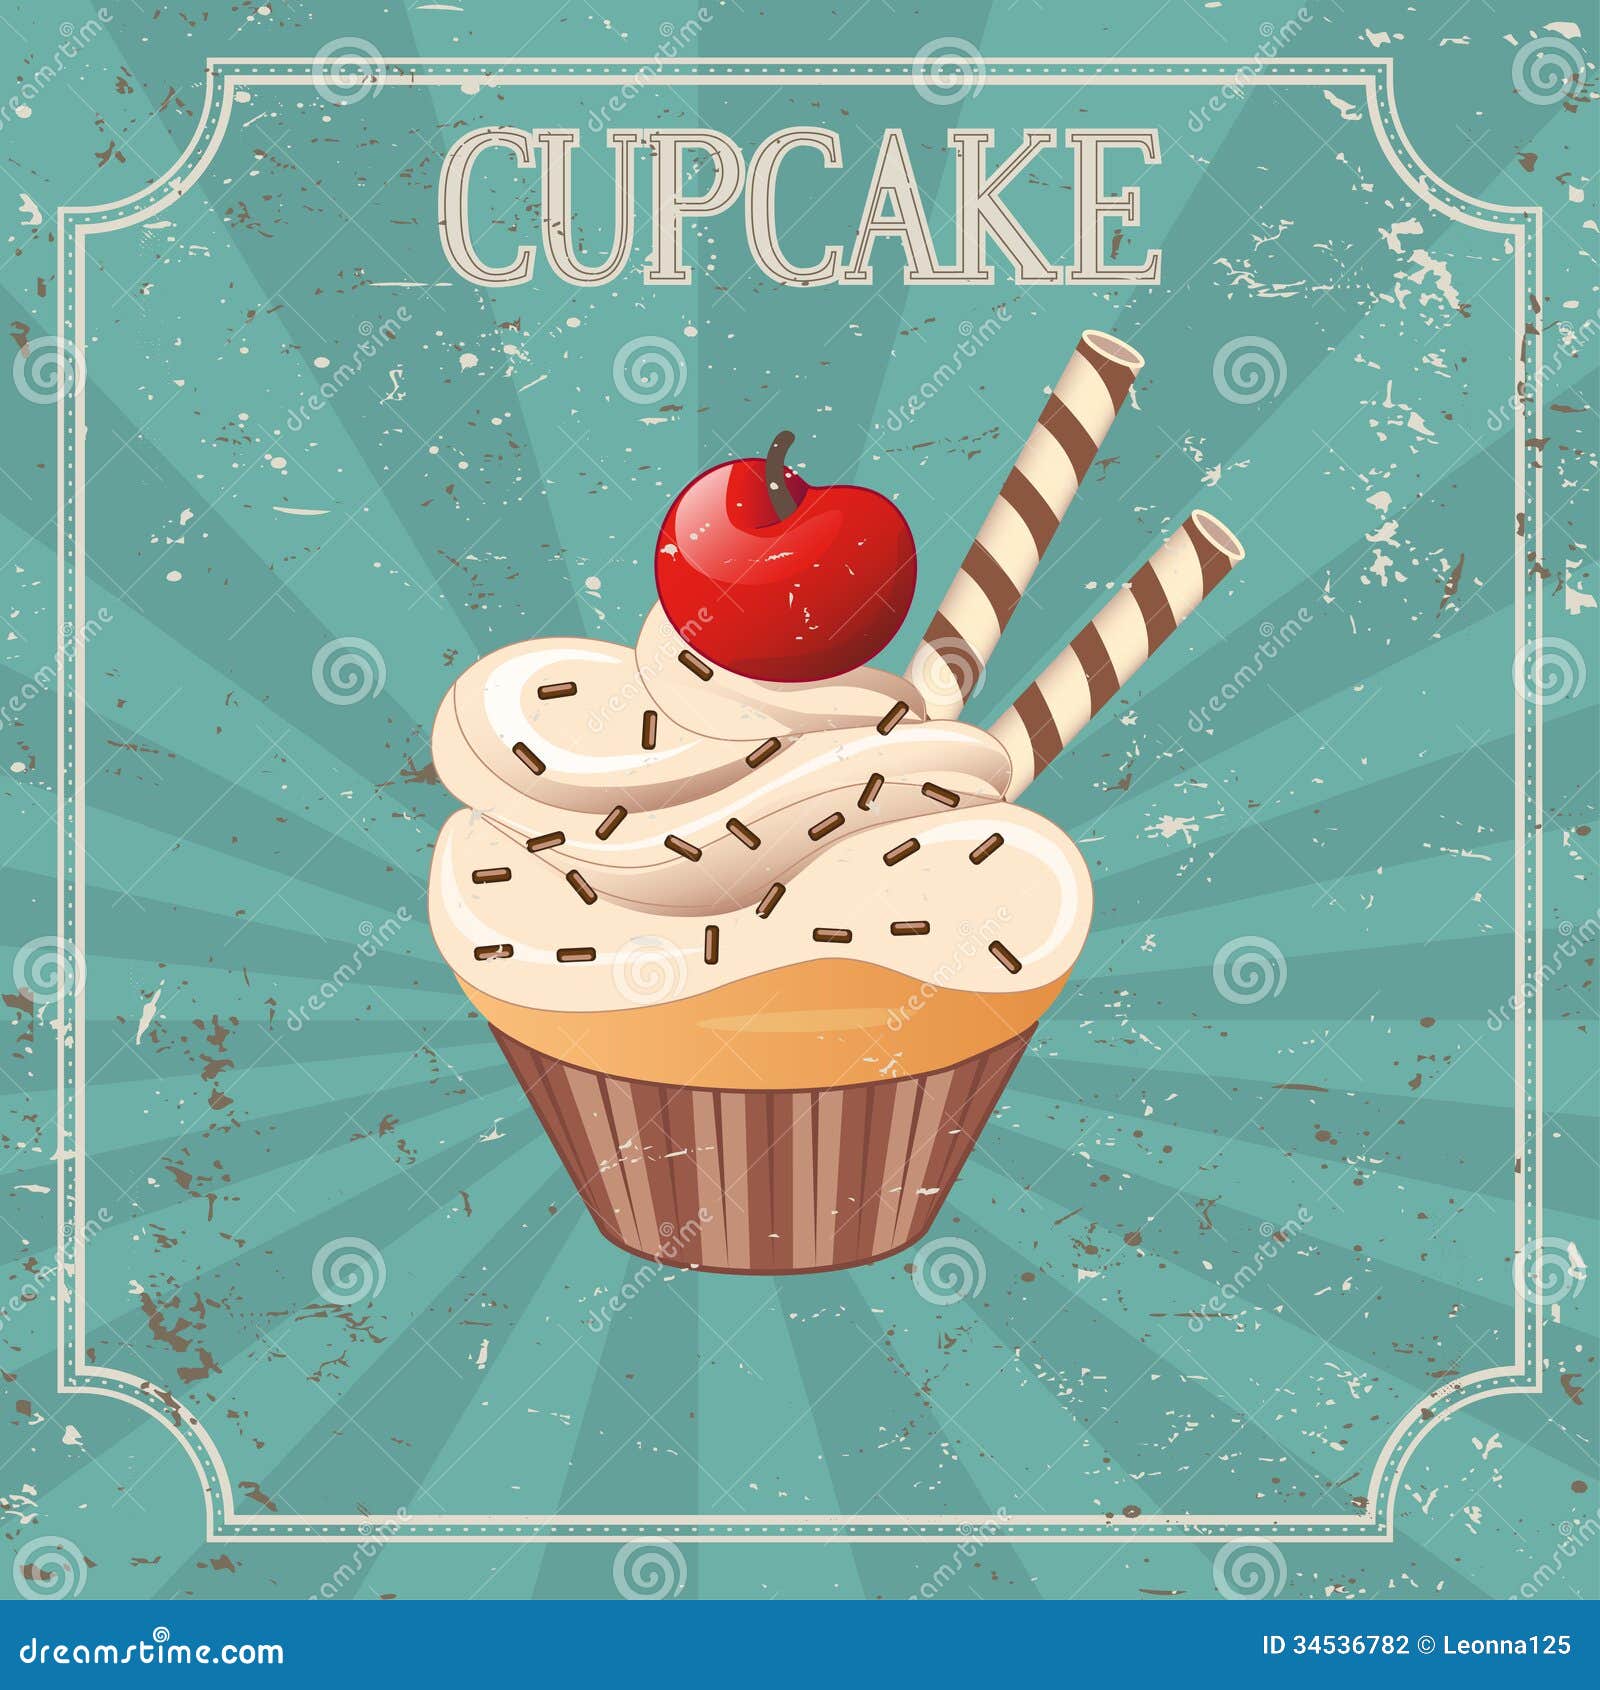 Vintage Stock   Image Background  On Cupcake vintage Photography   Illustration  cupcake pics